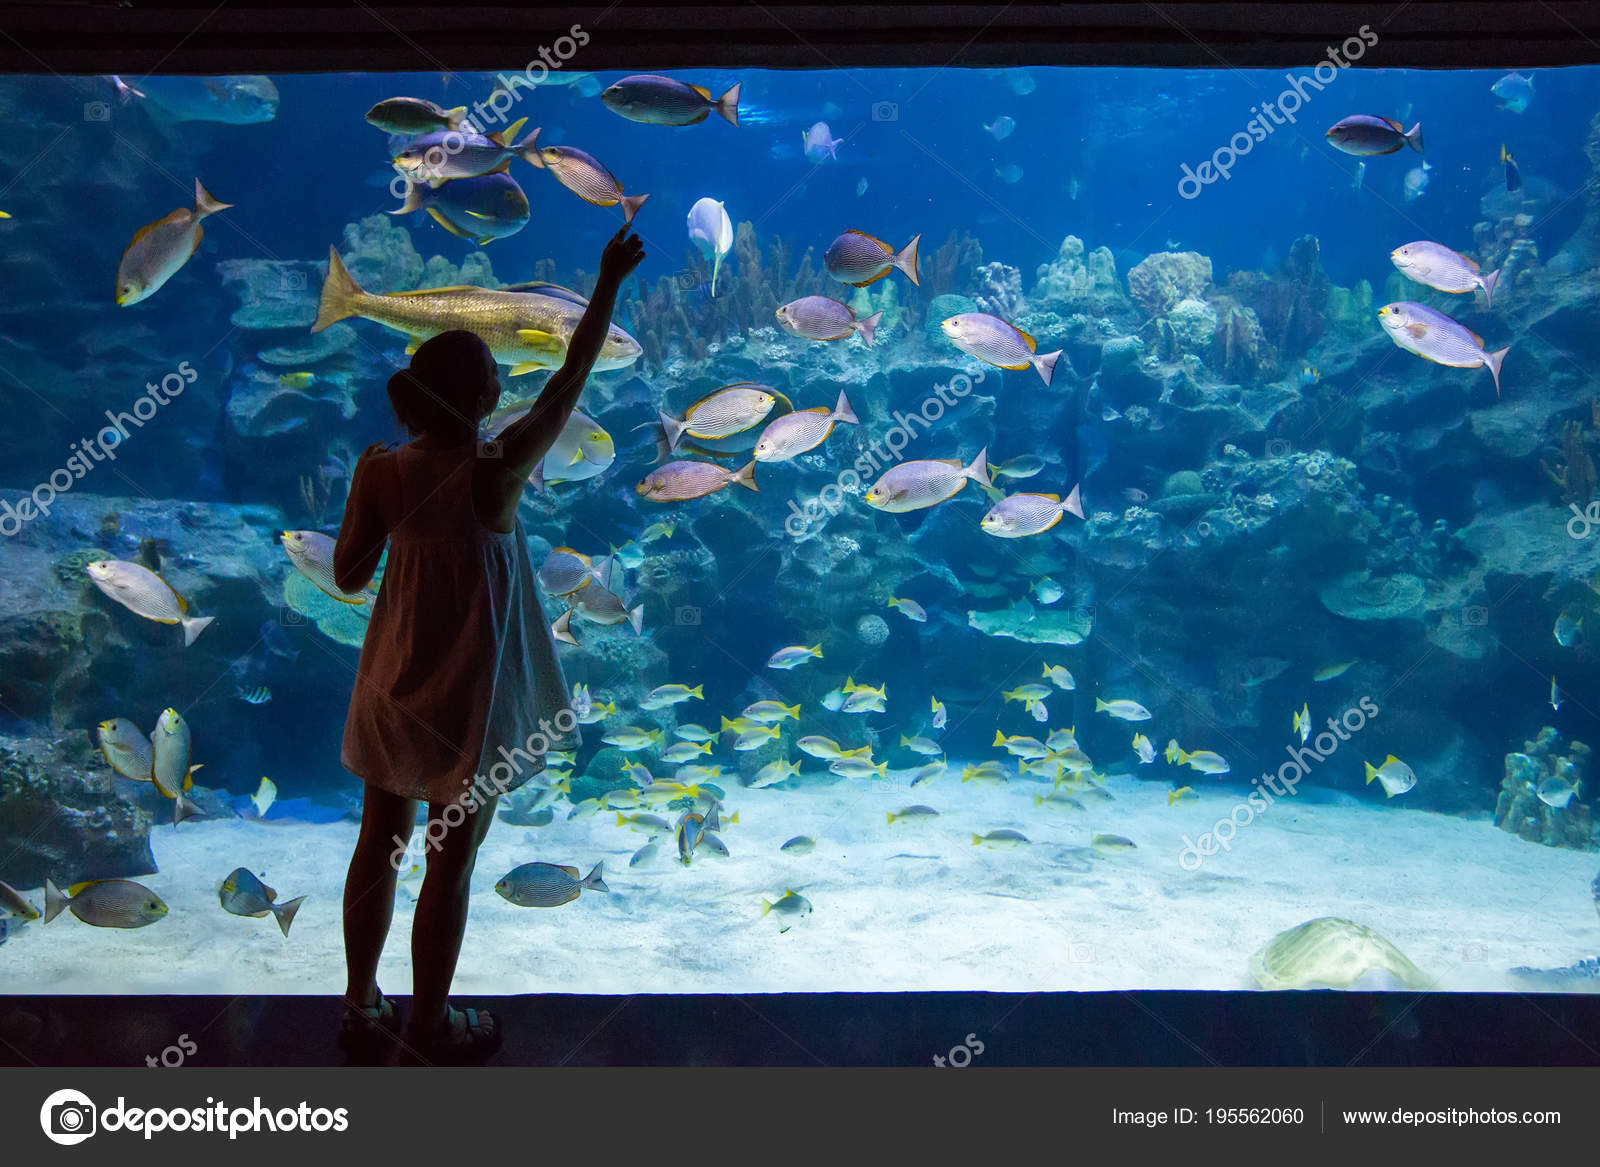 https://st3.depositphotos.com/2003159/19556/i/1600/depositphotos_195562060-stock-photo-woman-in-the-oceanarium.jpg